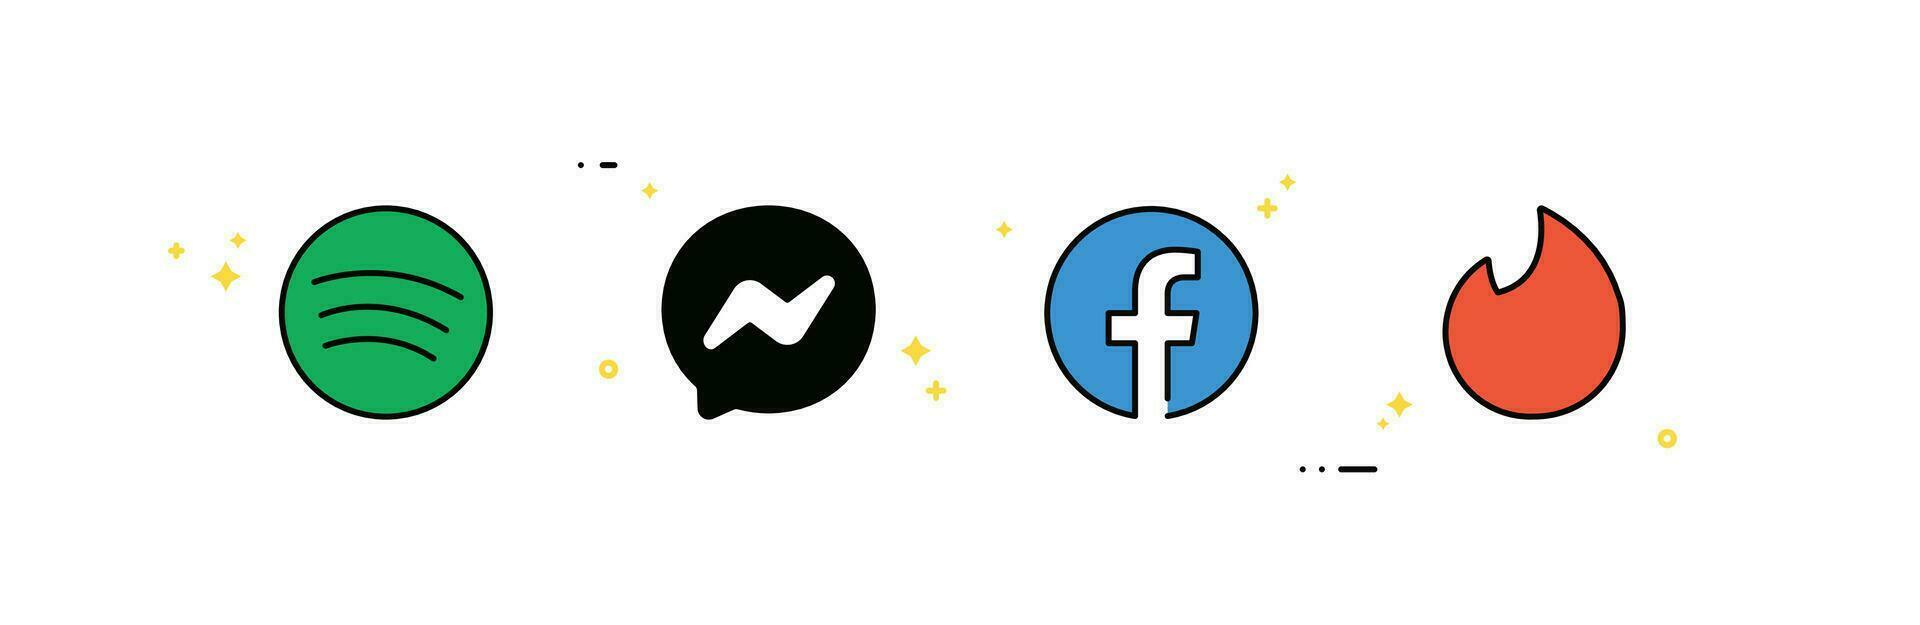 Social media logo icons, facebook, twitter, instagram, whatsapp, youtube, tiktok and flat design style minimal variety vector illustration.